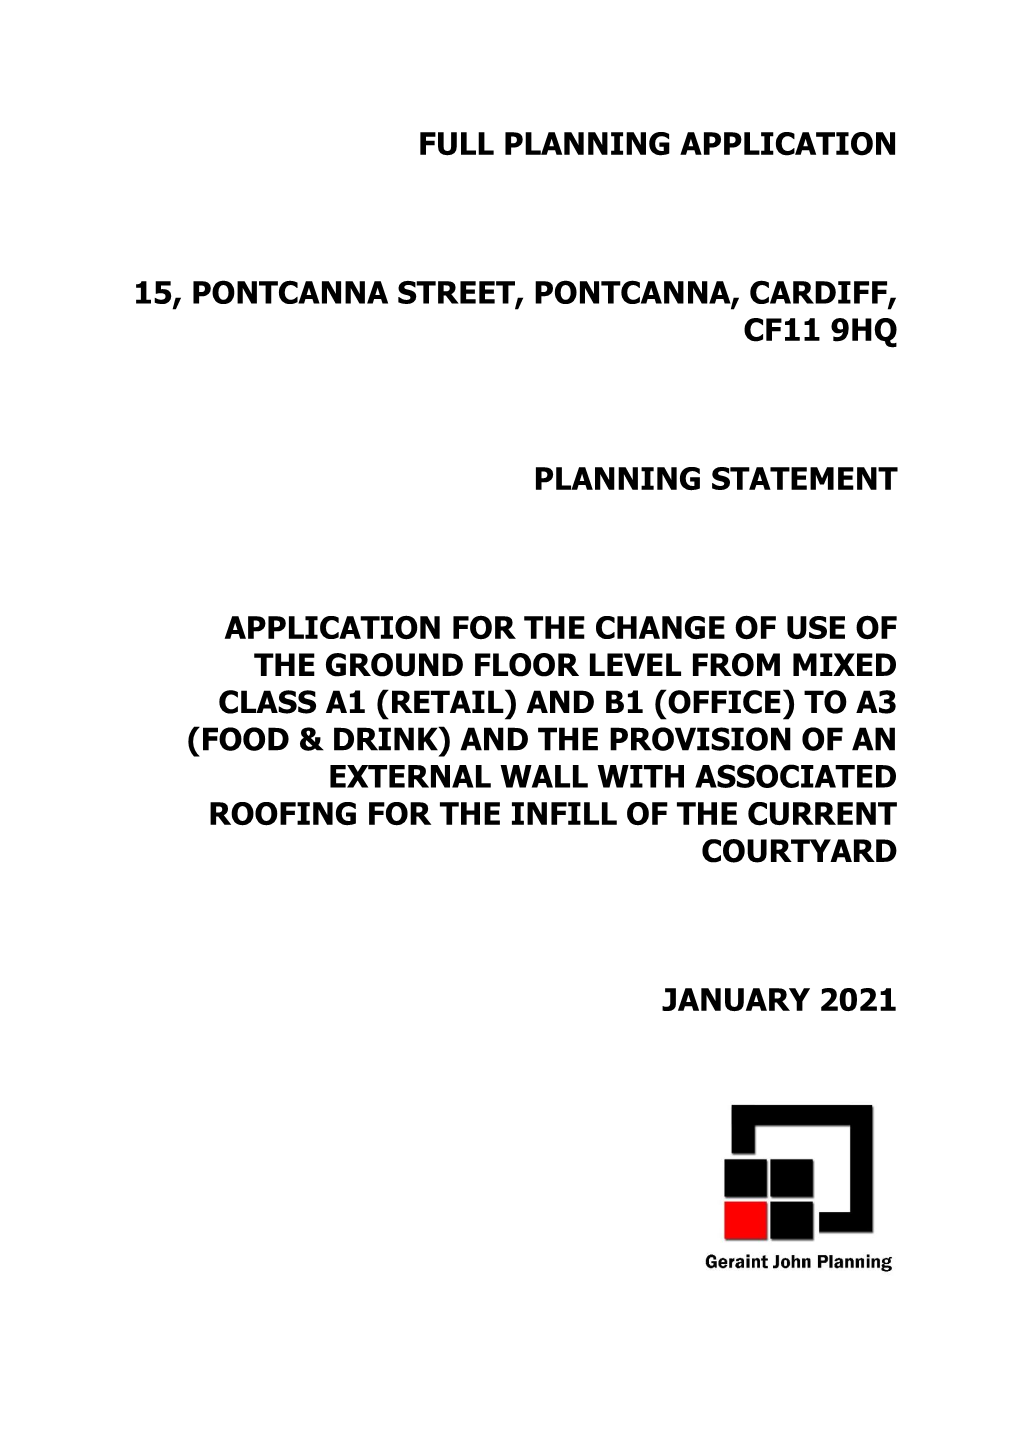 Full Planning Application 15, Pontcanna Street